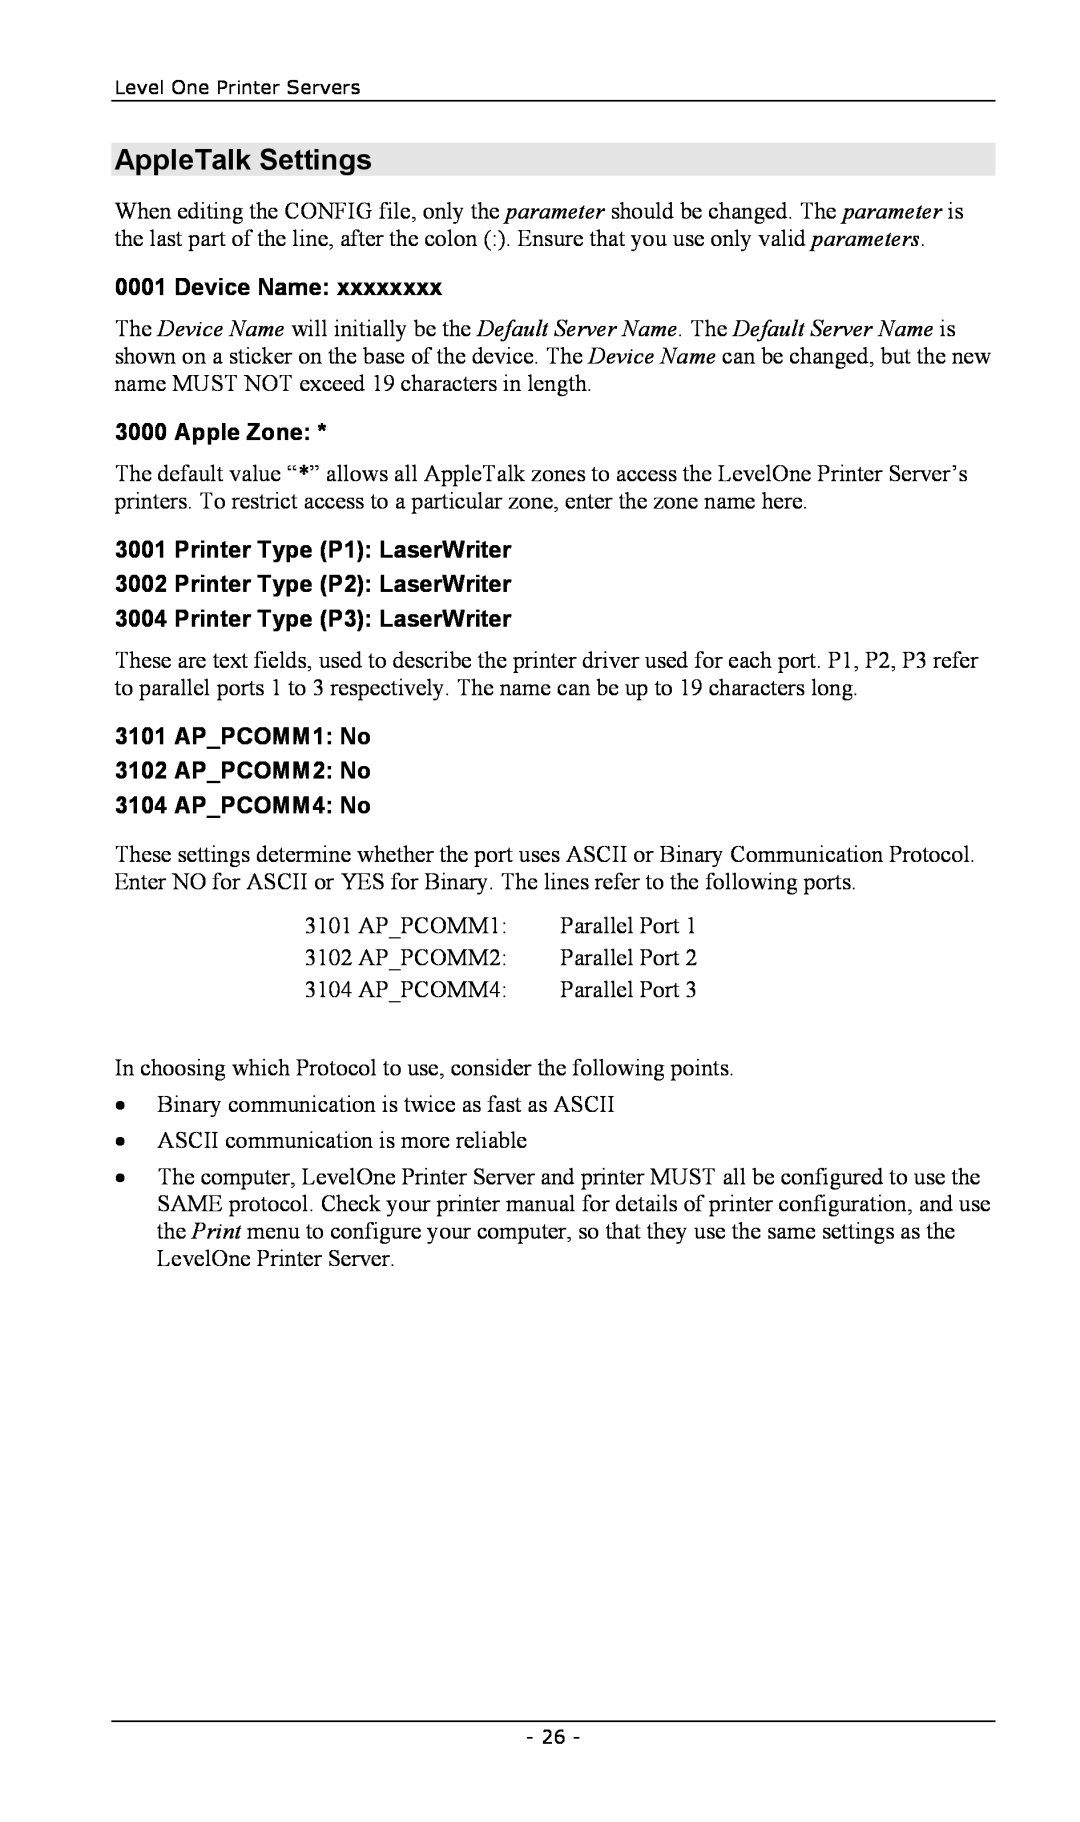 LevelOne EPS-3001TU, FPS-2003TXU, FPS-2111TXU manual AppleTalk Settings, Device Name, Apple Zone, Printer Type P3 LaserWriter 